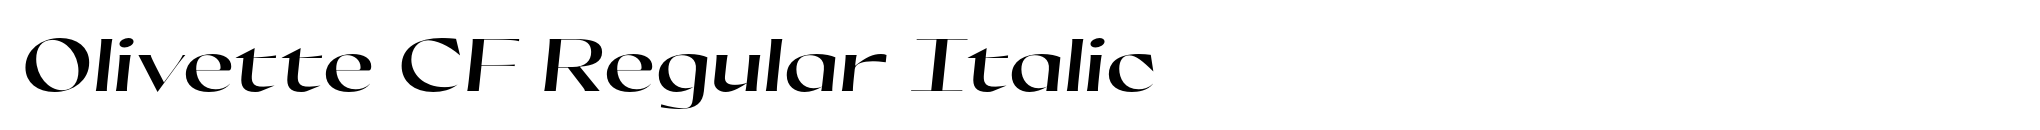 Olivette CF Regular Italic image